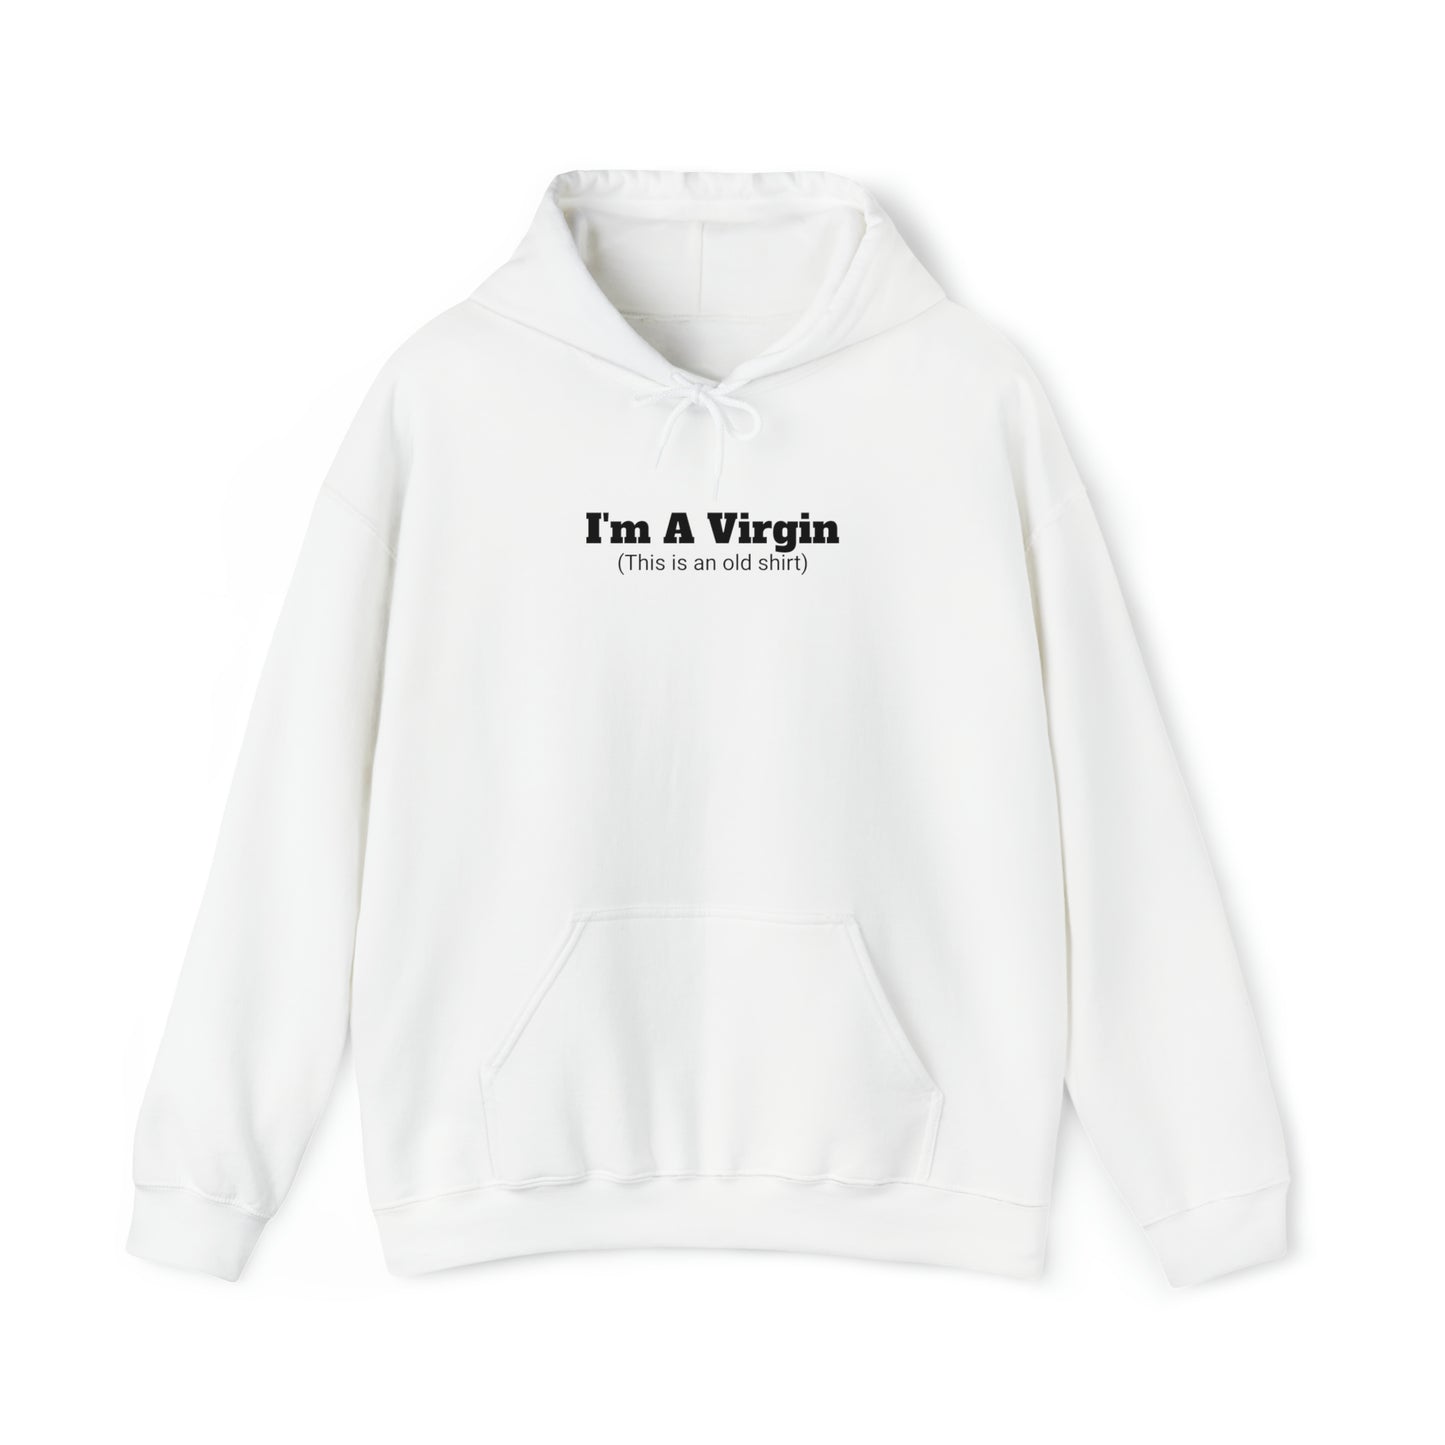 I'm A Virgin Sweatshirt White